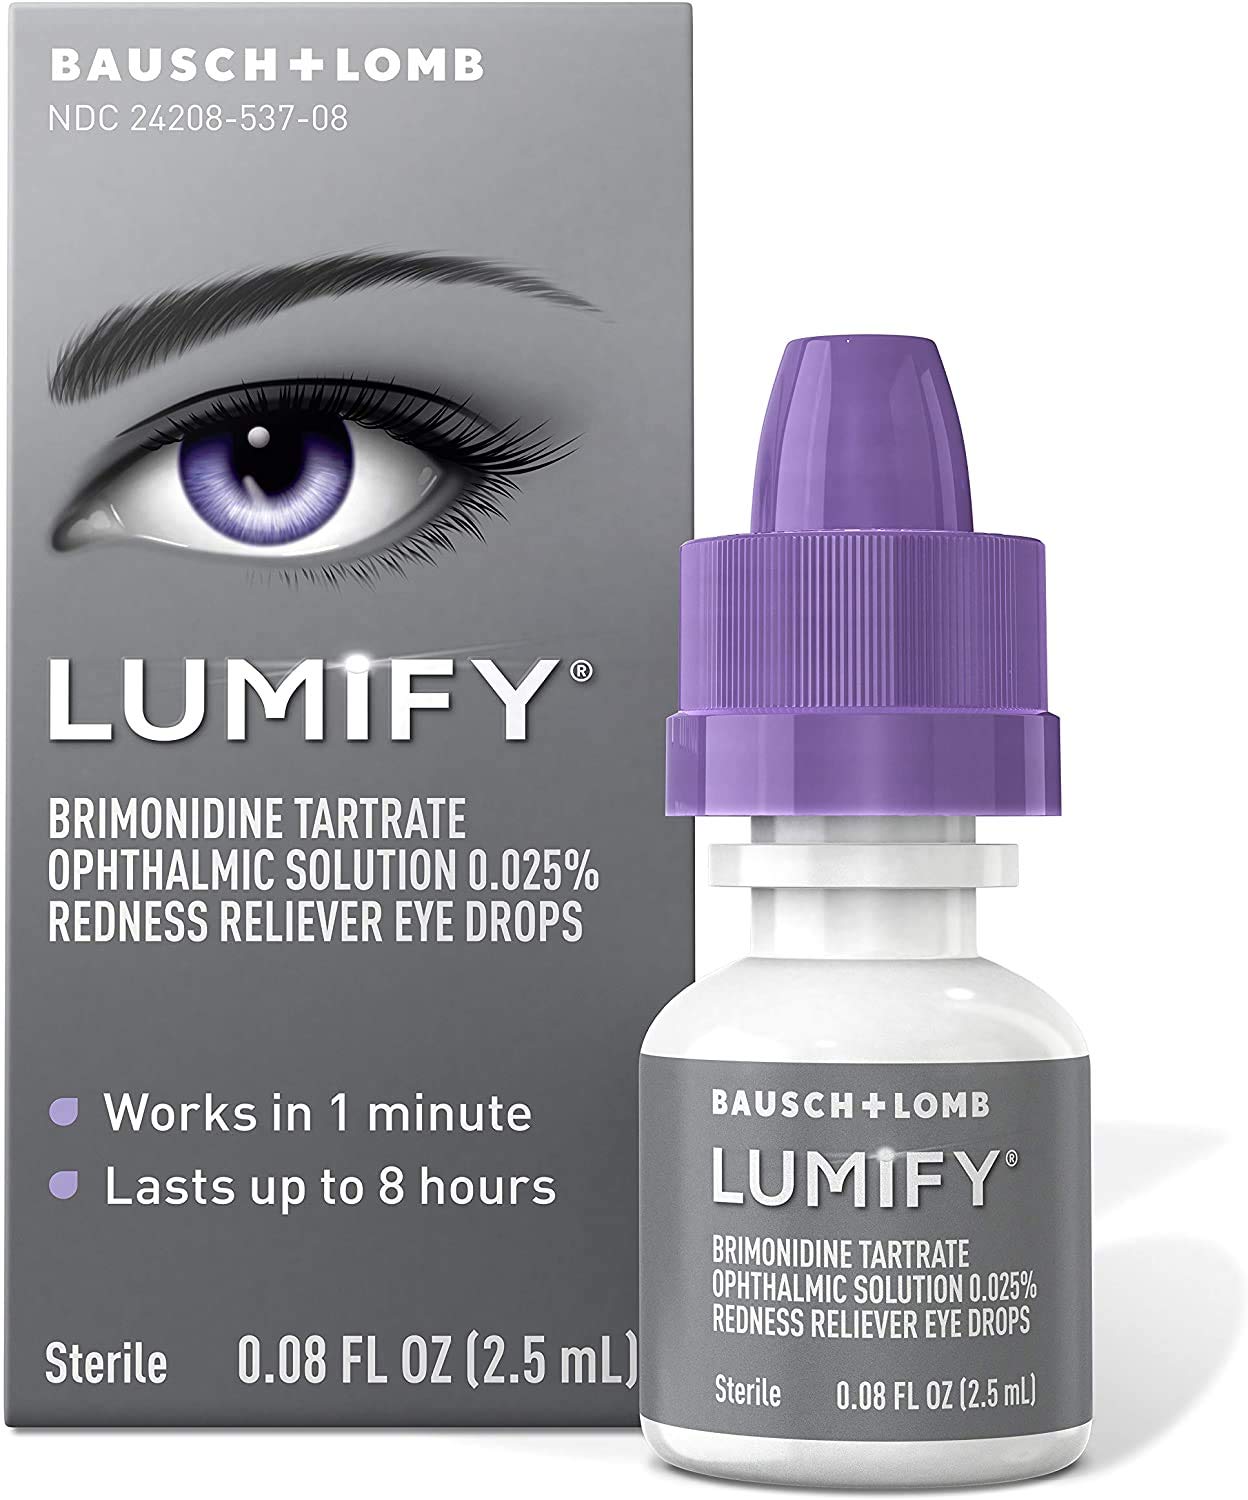 LUMIFY eye drops